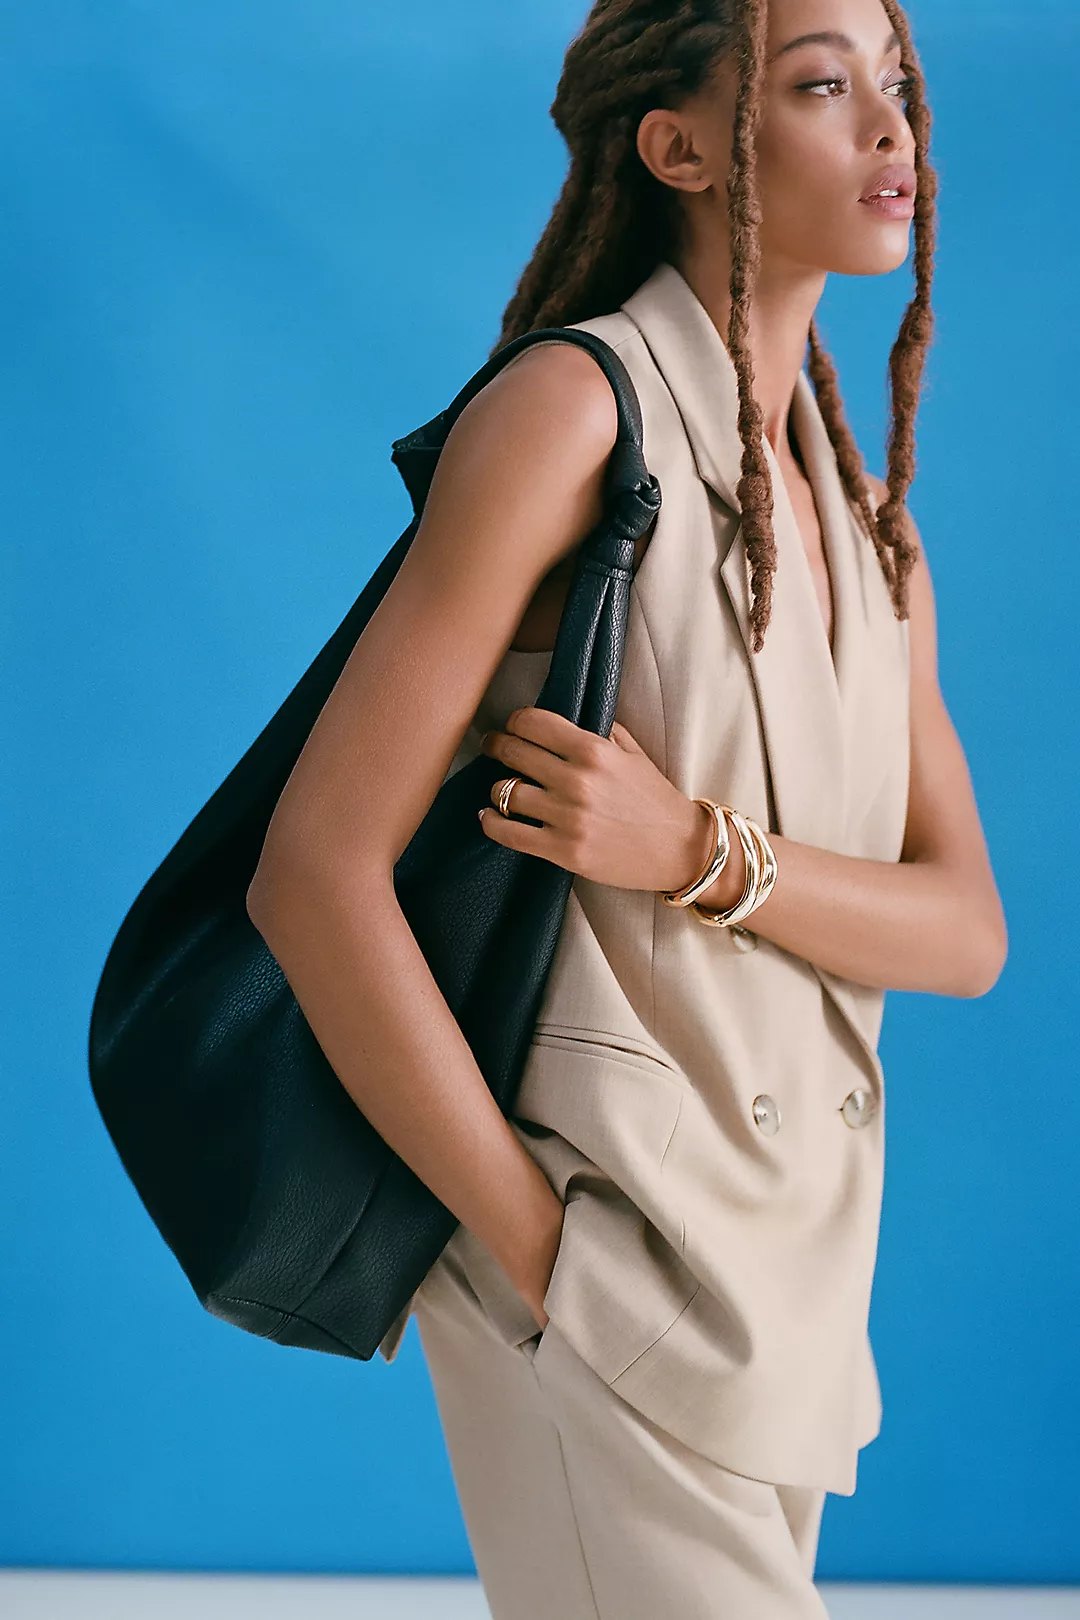 Women's Bag Designer Belt Bags Stone Pattern Chain PU Leather